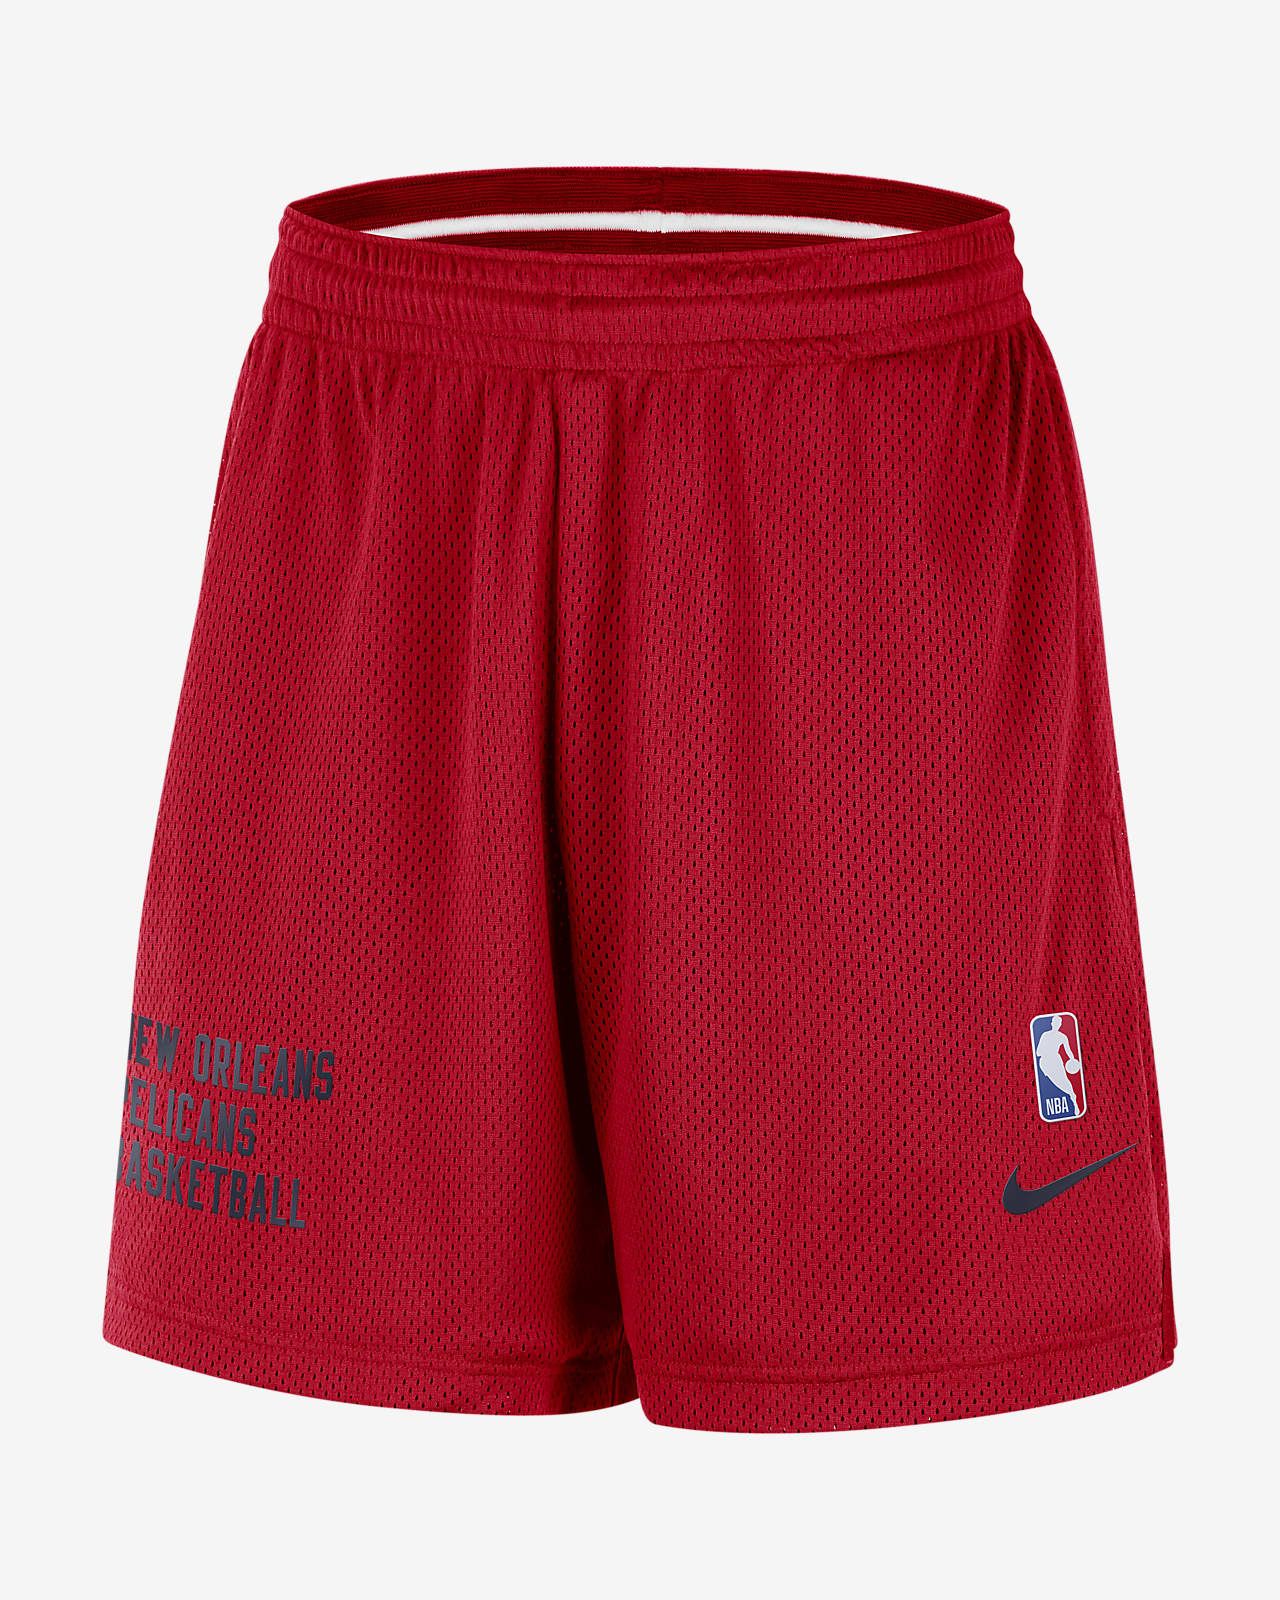 New Orleans Pelicans Men's Nike NBA Mesh Shorts